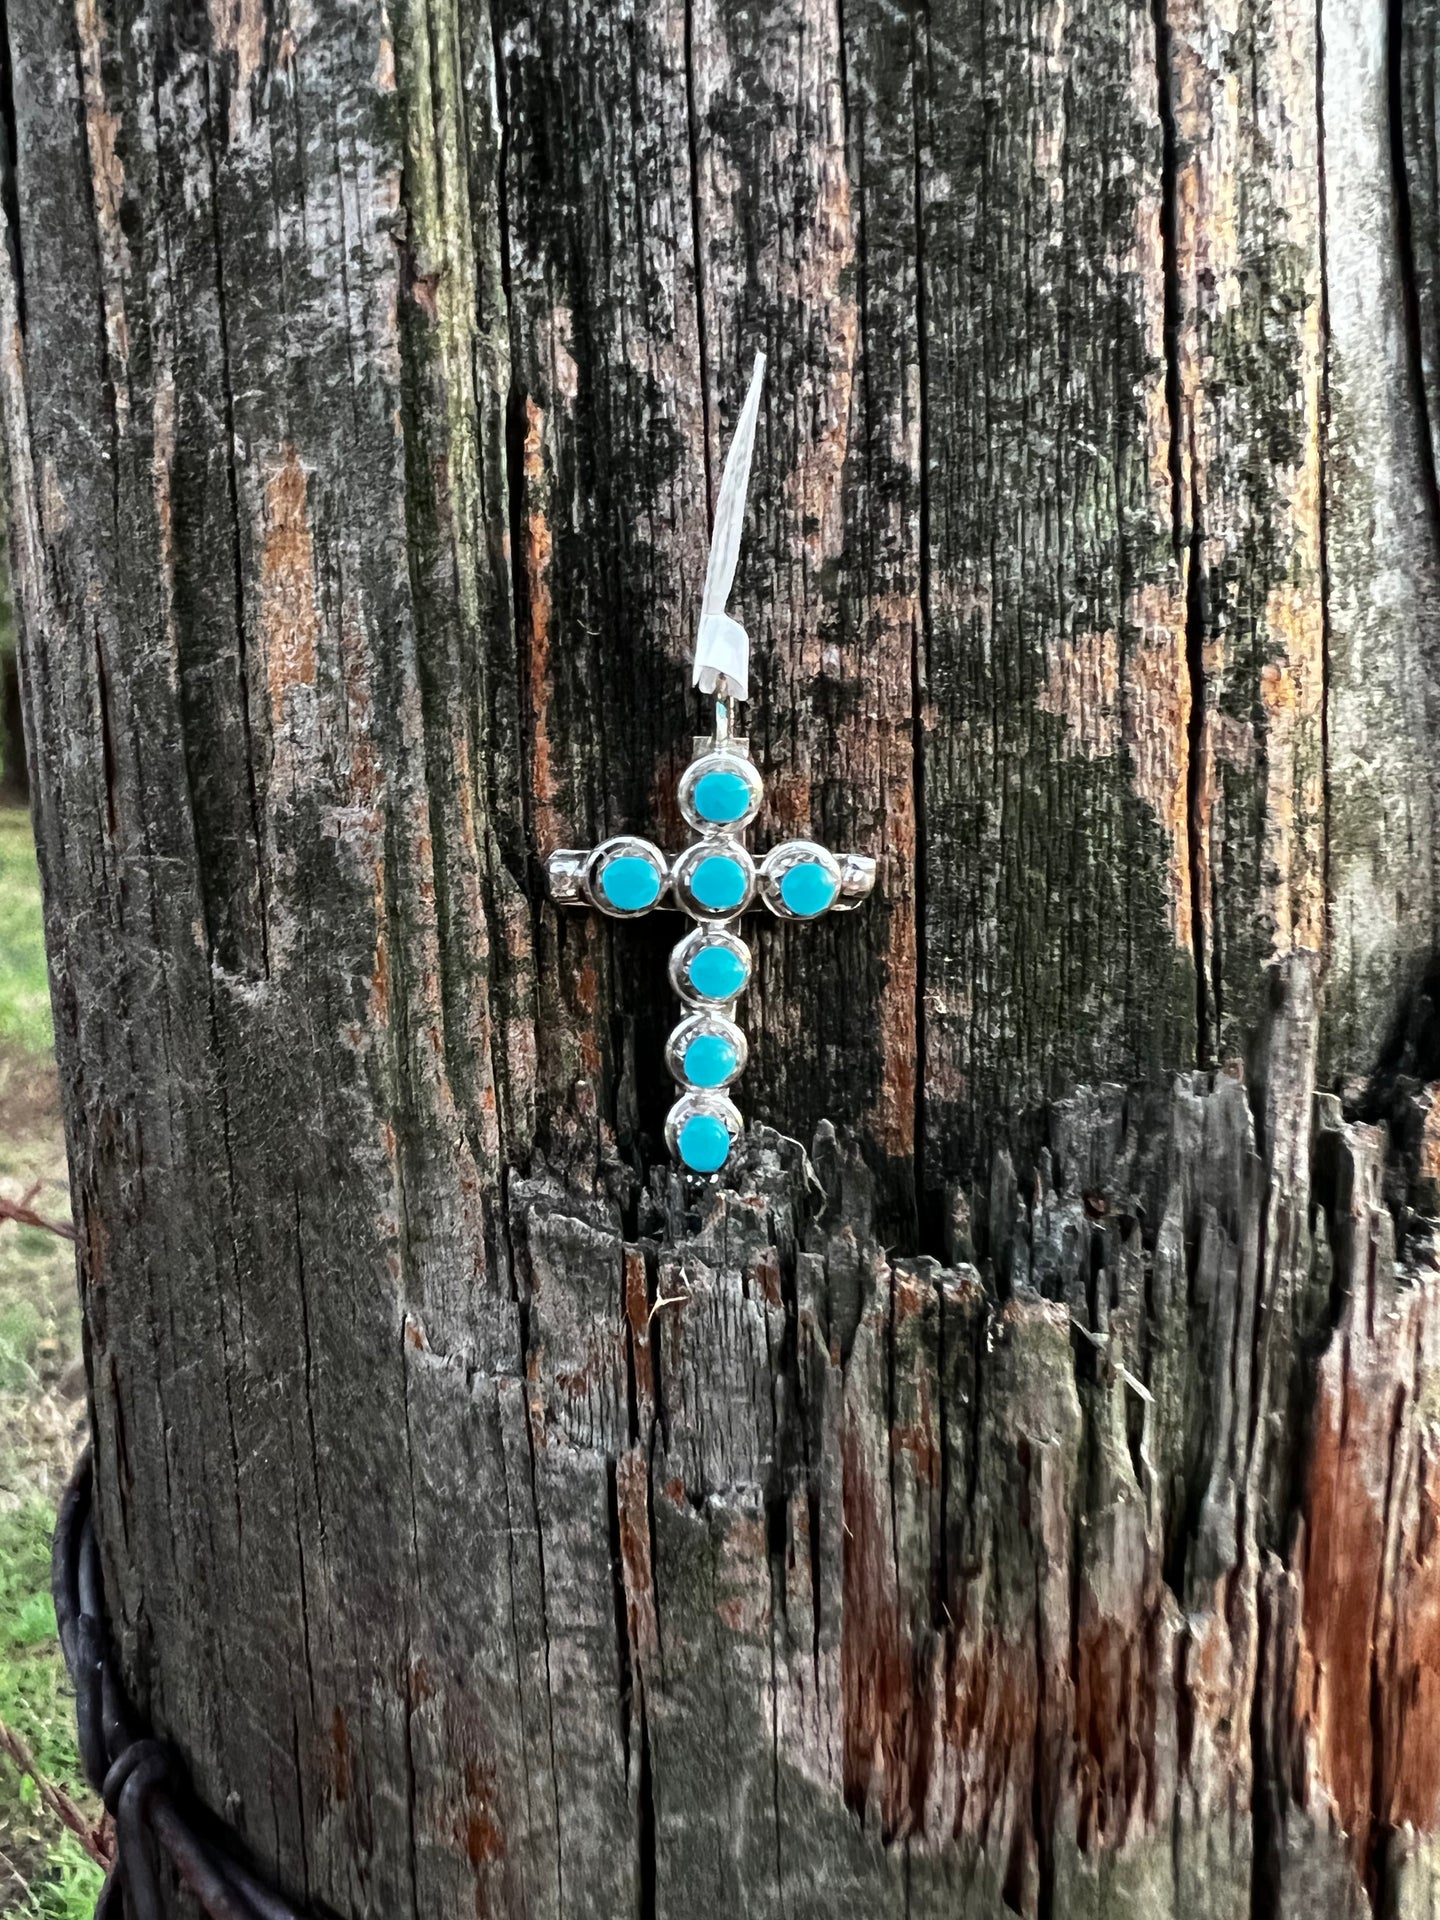 The Turquoise Cross Pendant